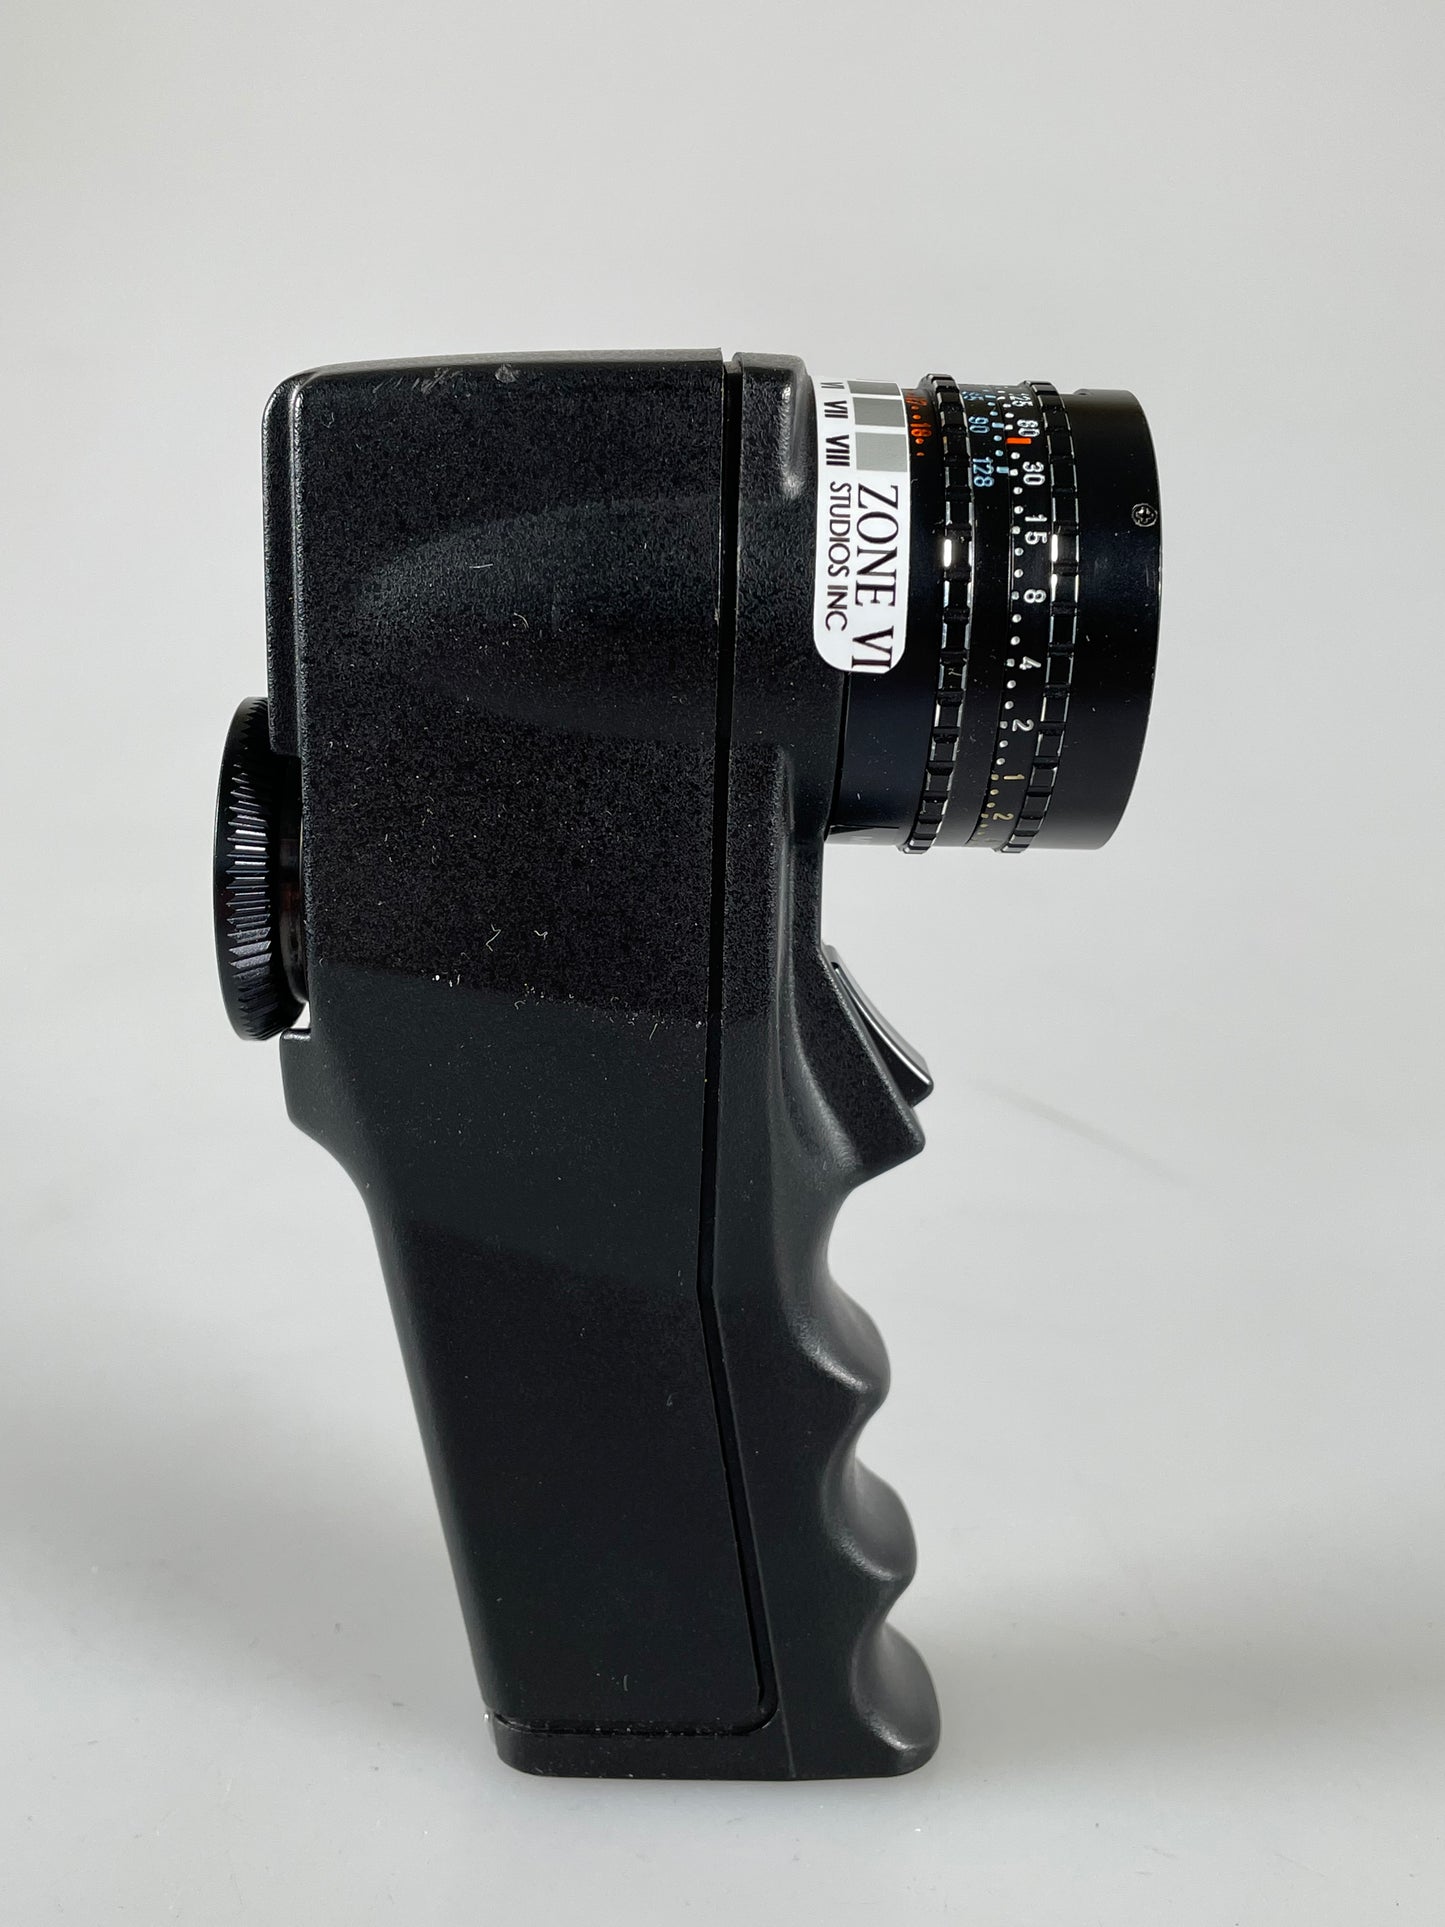 Pentax digital spotmeter Zone VI calibrated modified